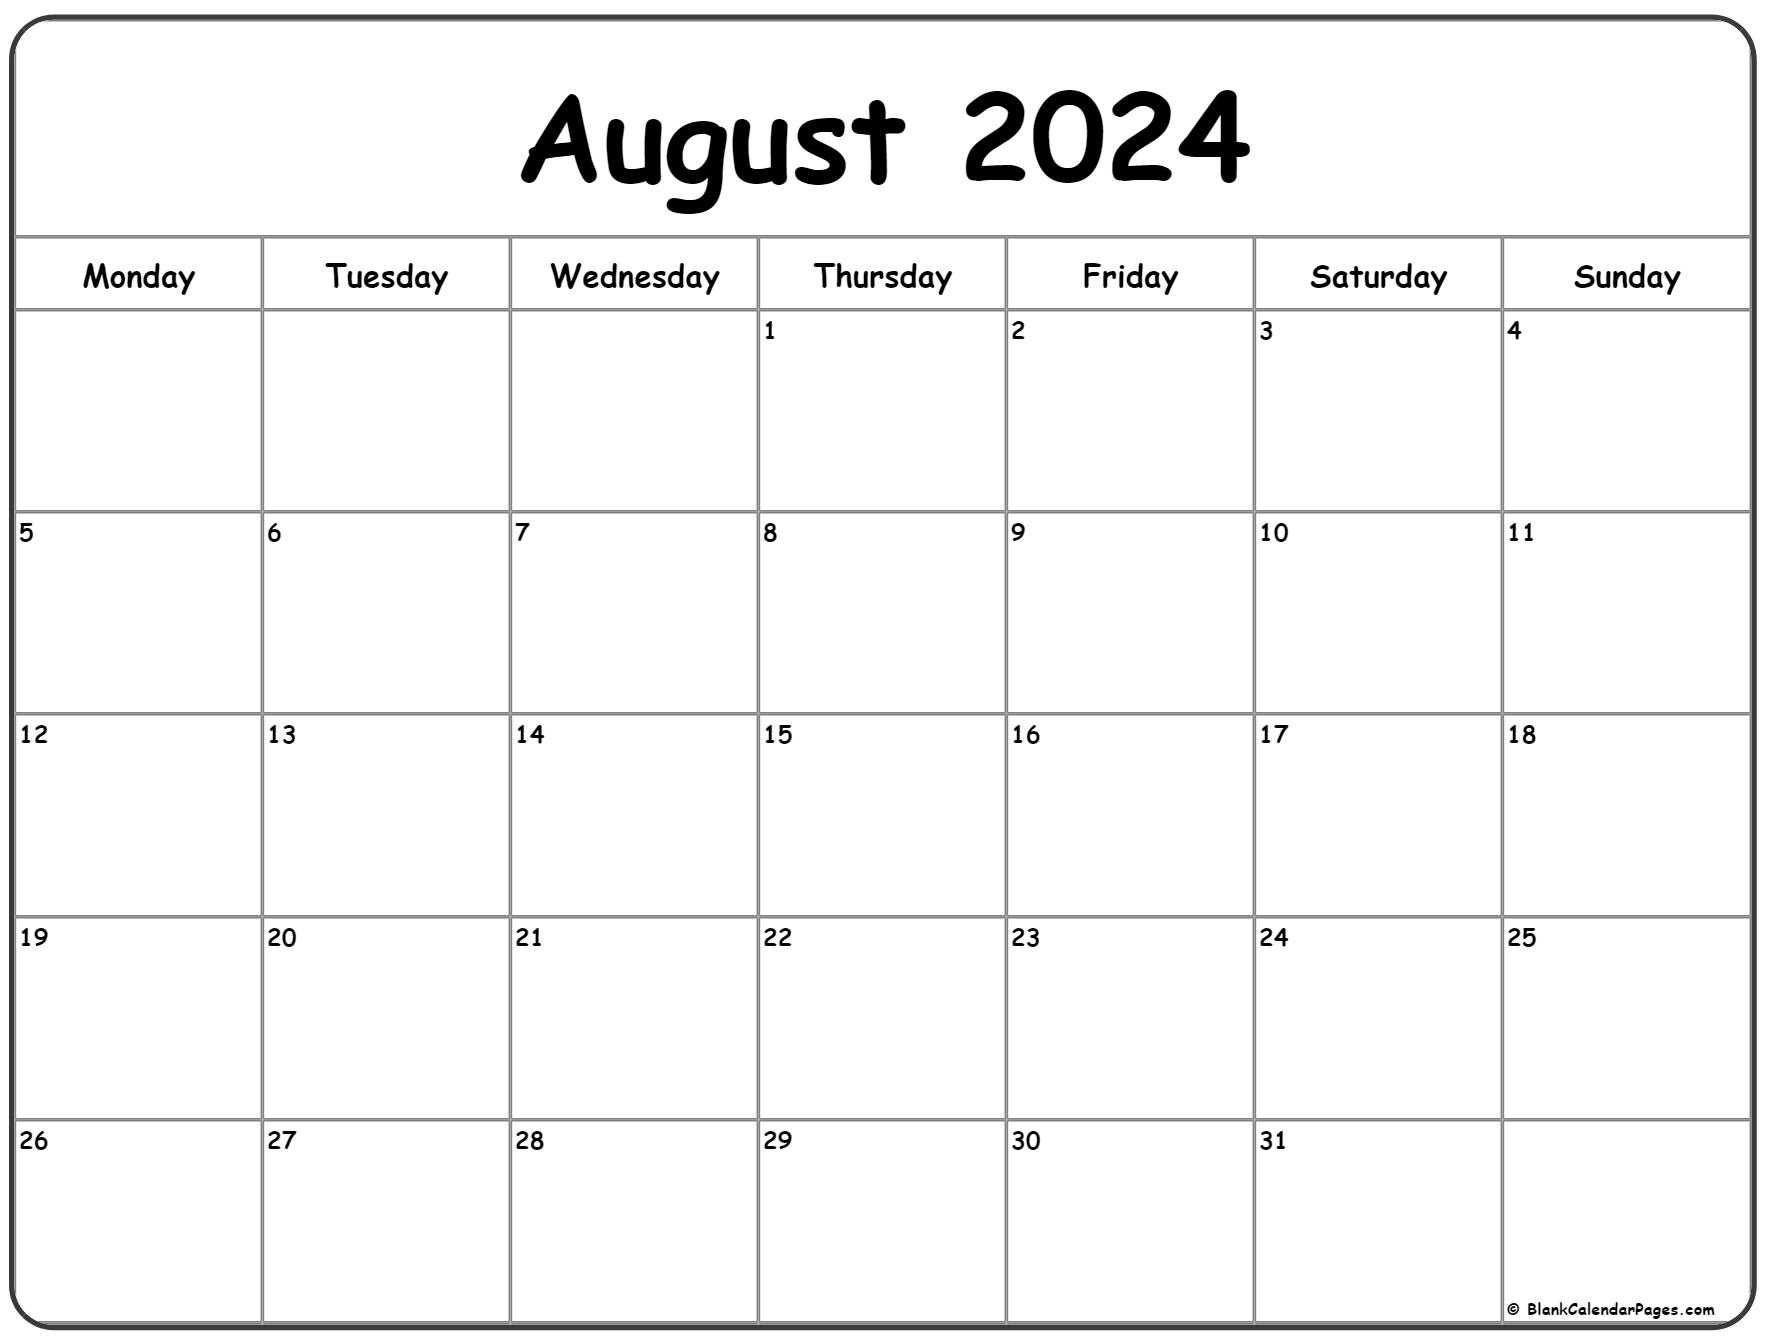 August 2024 Monday Calendar | Monday To Sunday for August 2024 Calendar Printable